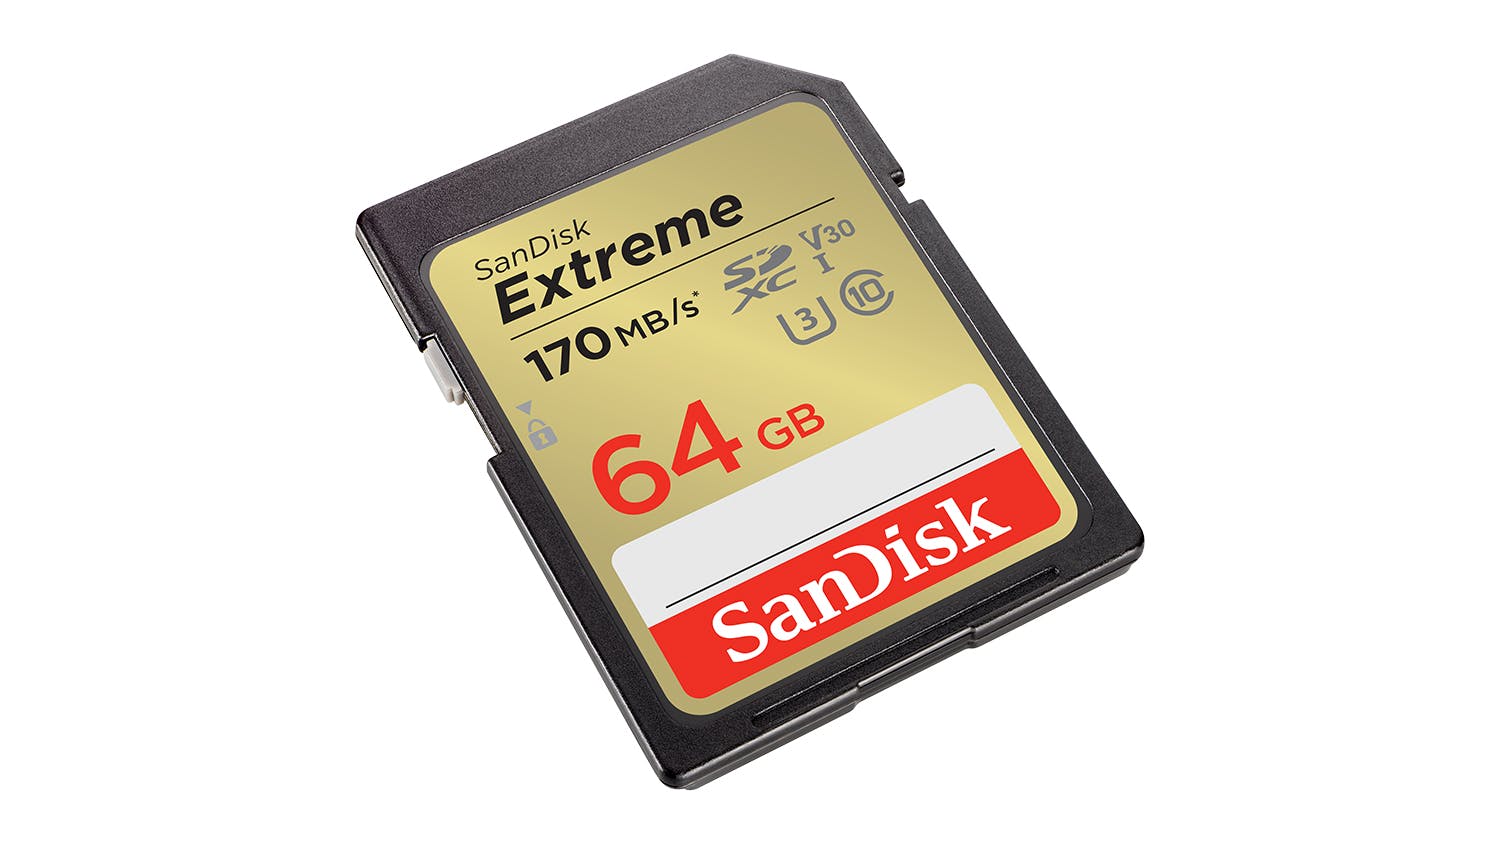 SanDisk Extreme SDXC Card - 64GB